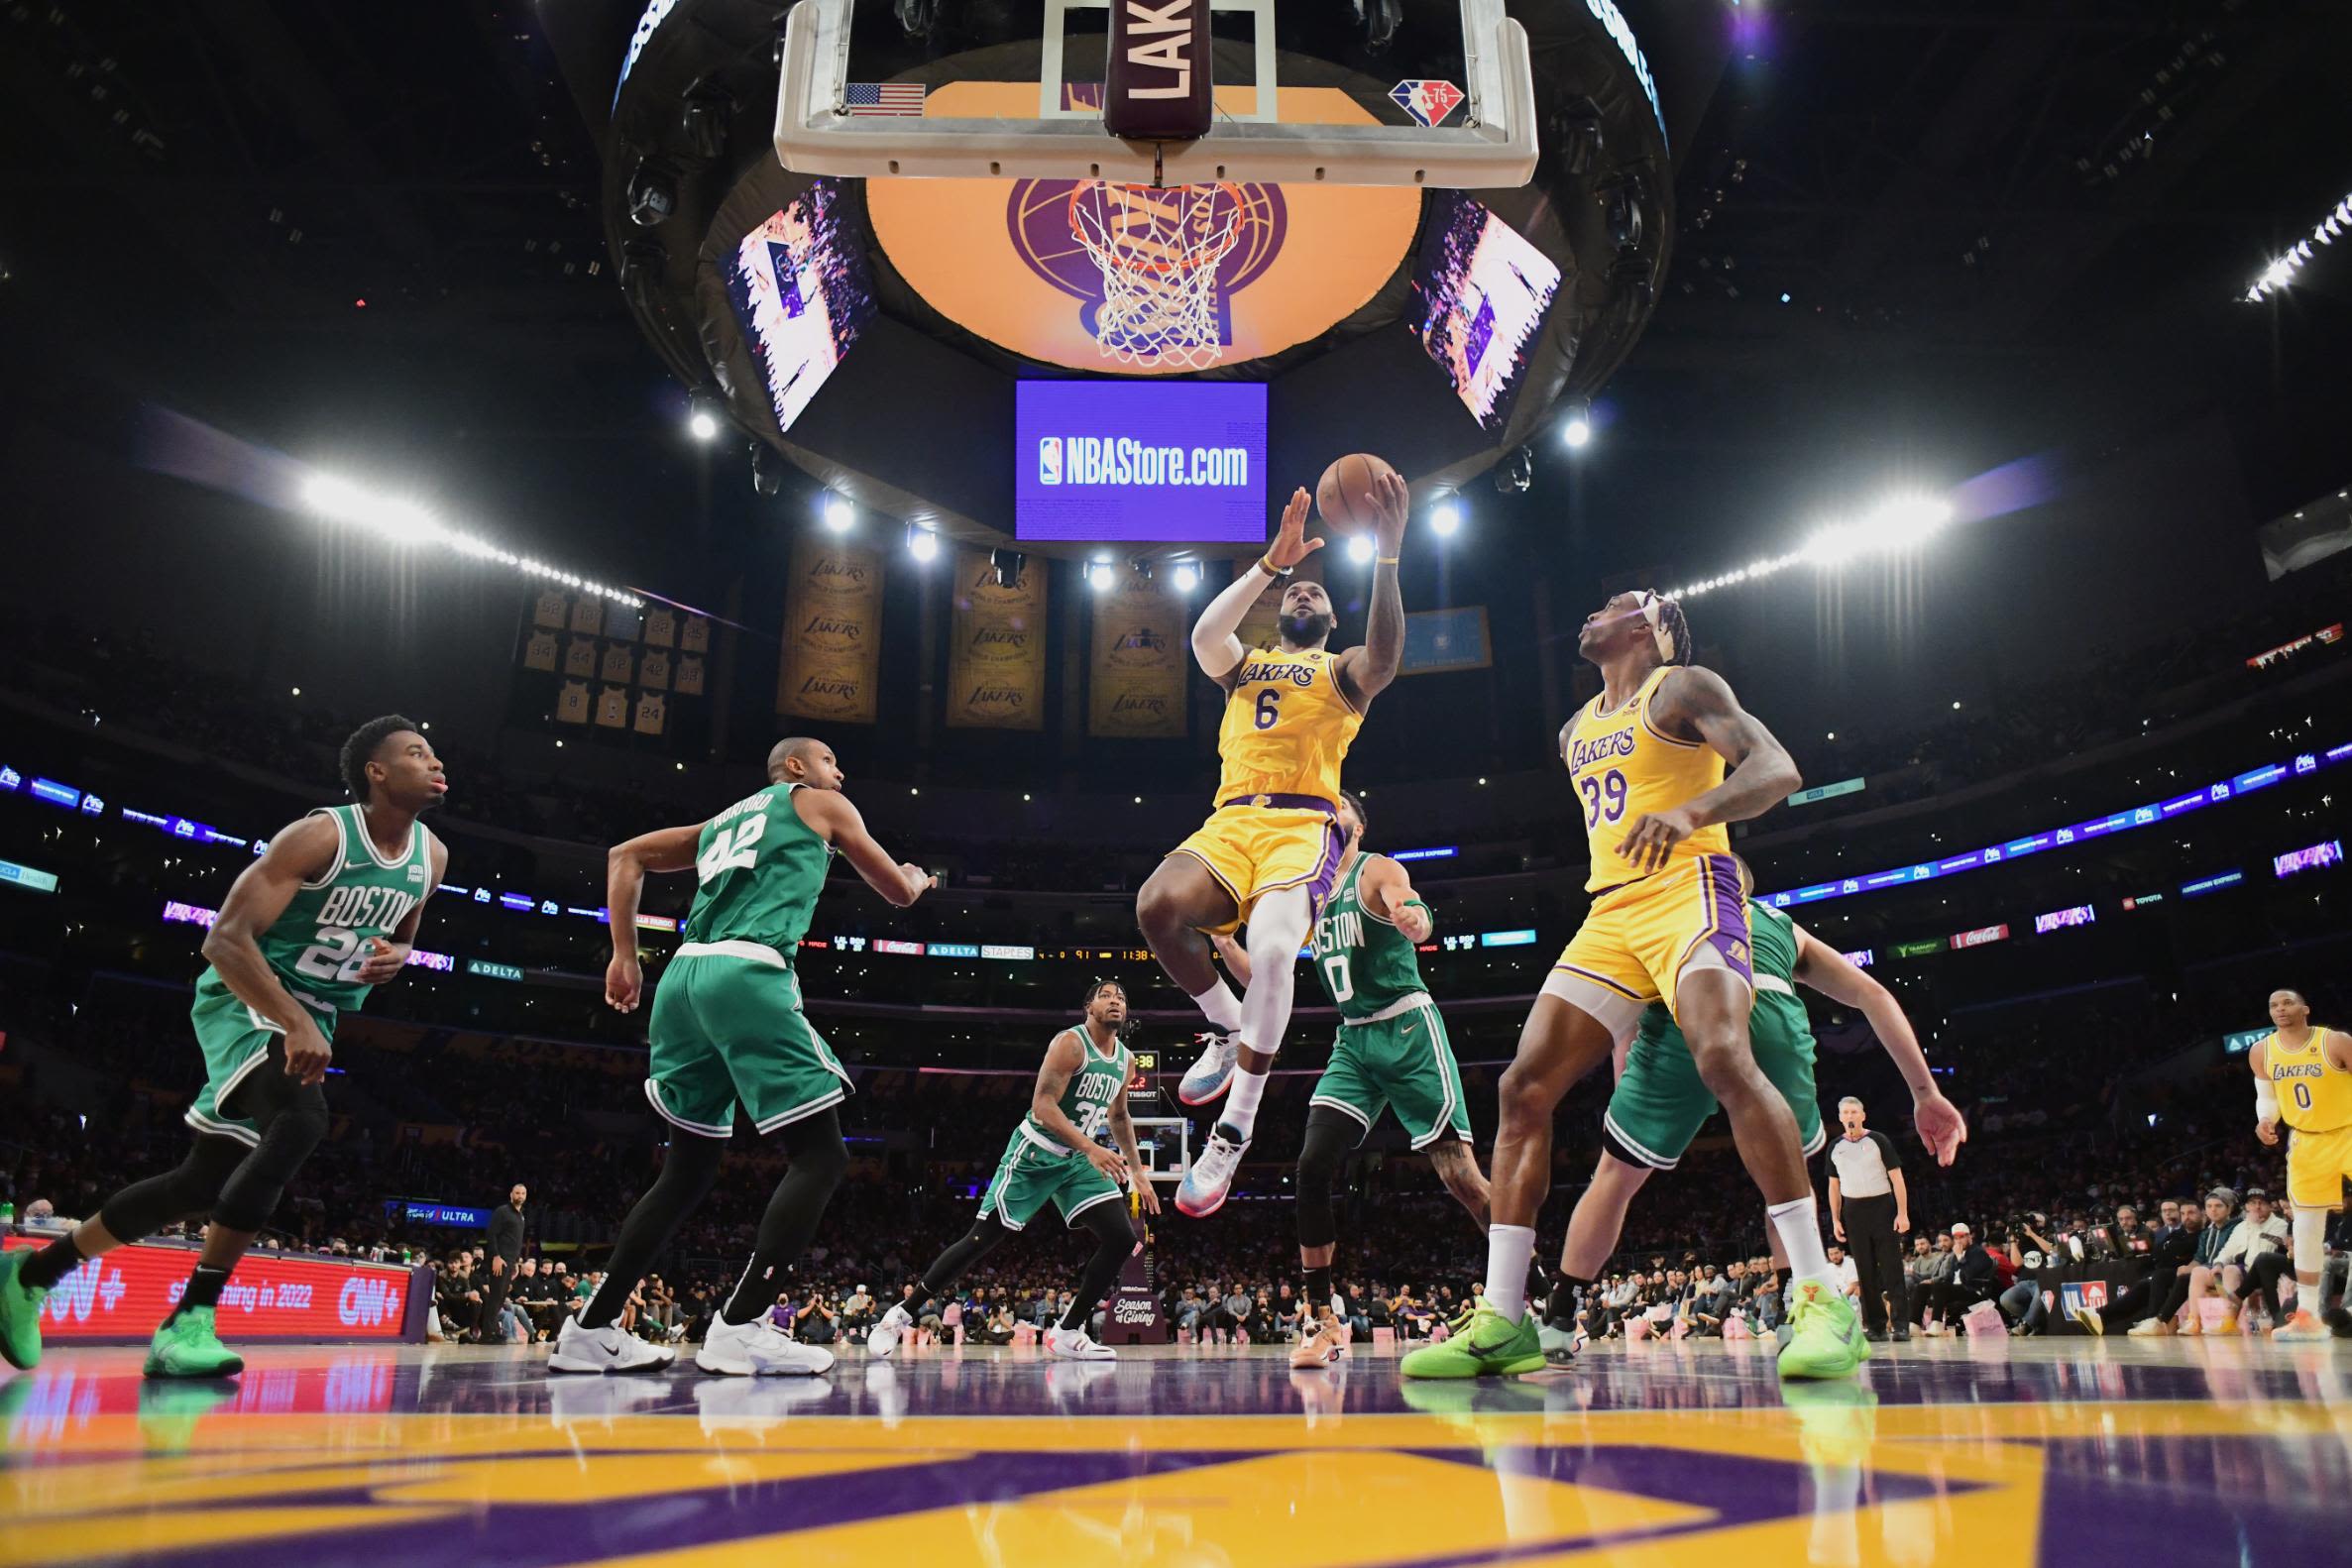 Lakers vs Celtics: LeBron James leads LA to 117-102 victory over